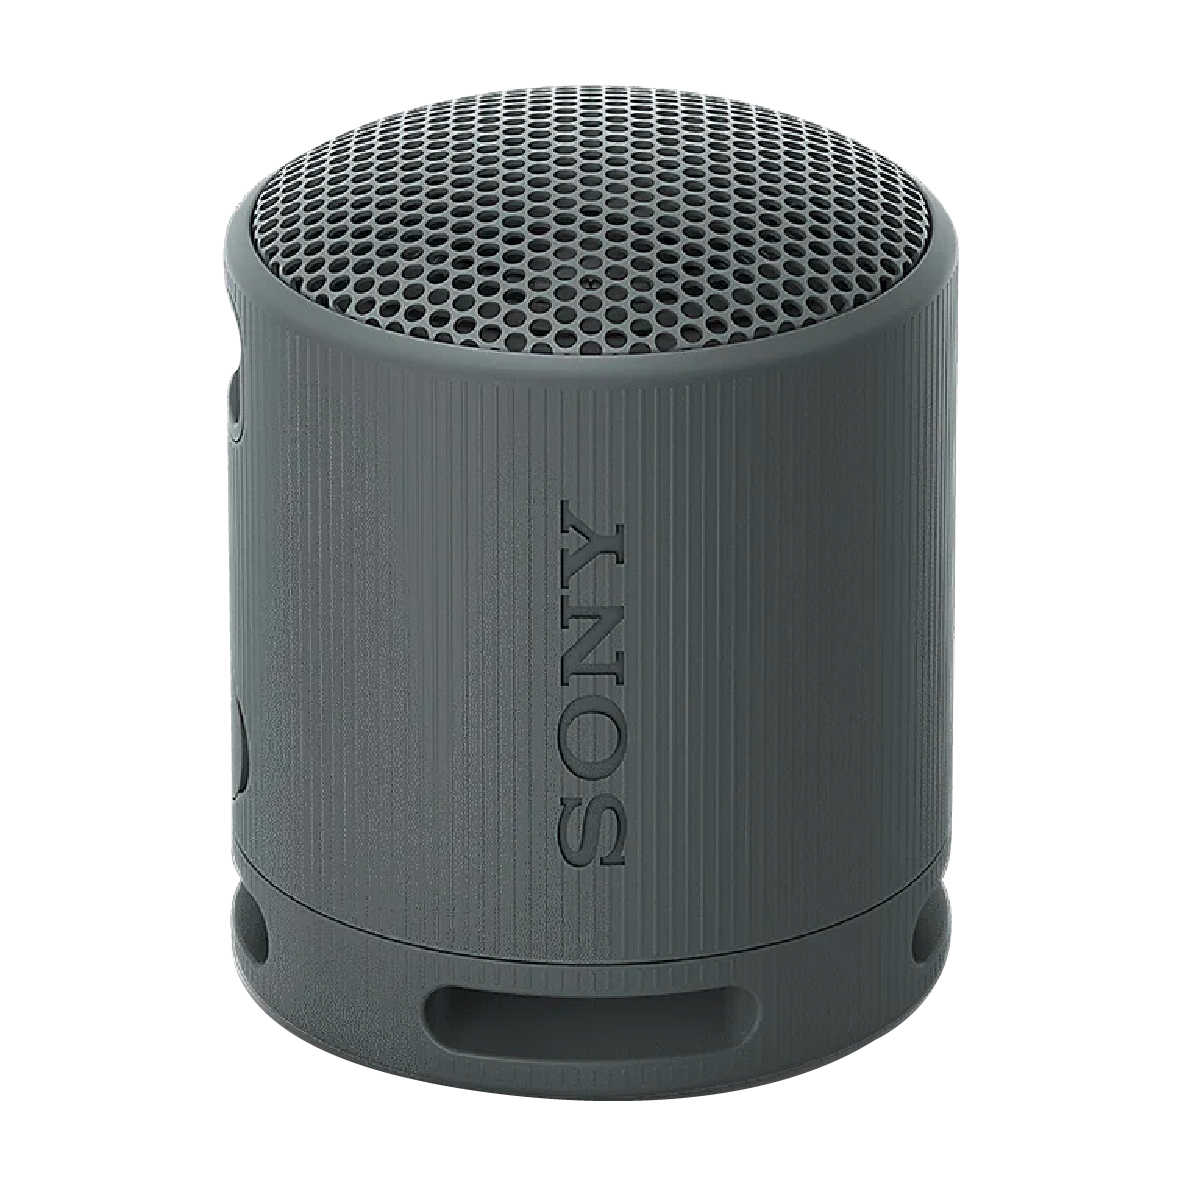 SONY SRS-XB100 黑色 IP67 藍牙5.3 免持通話 雙機配對 可攜式 無線 揚聲器 | 金曲音響